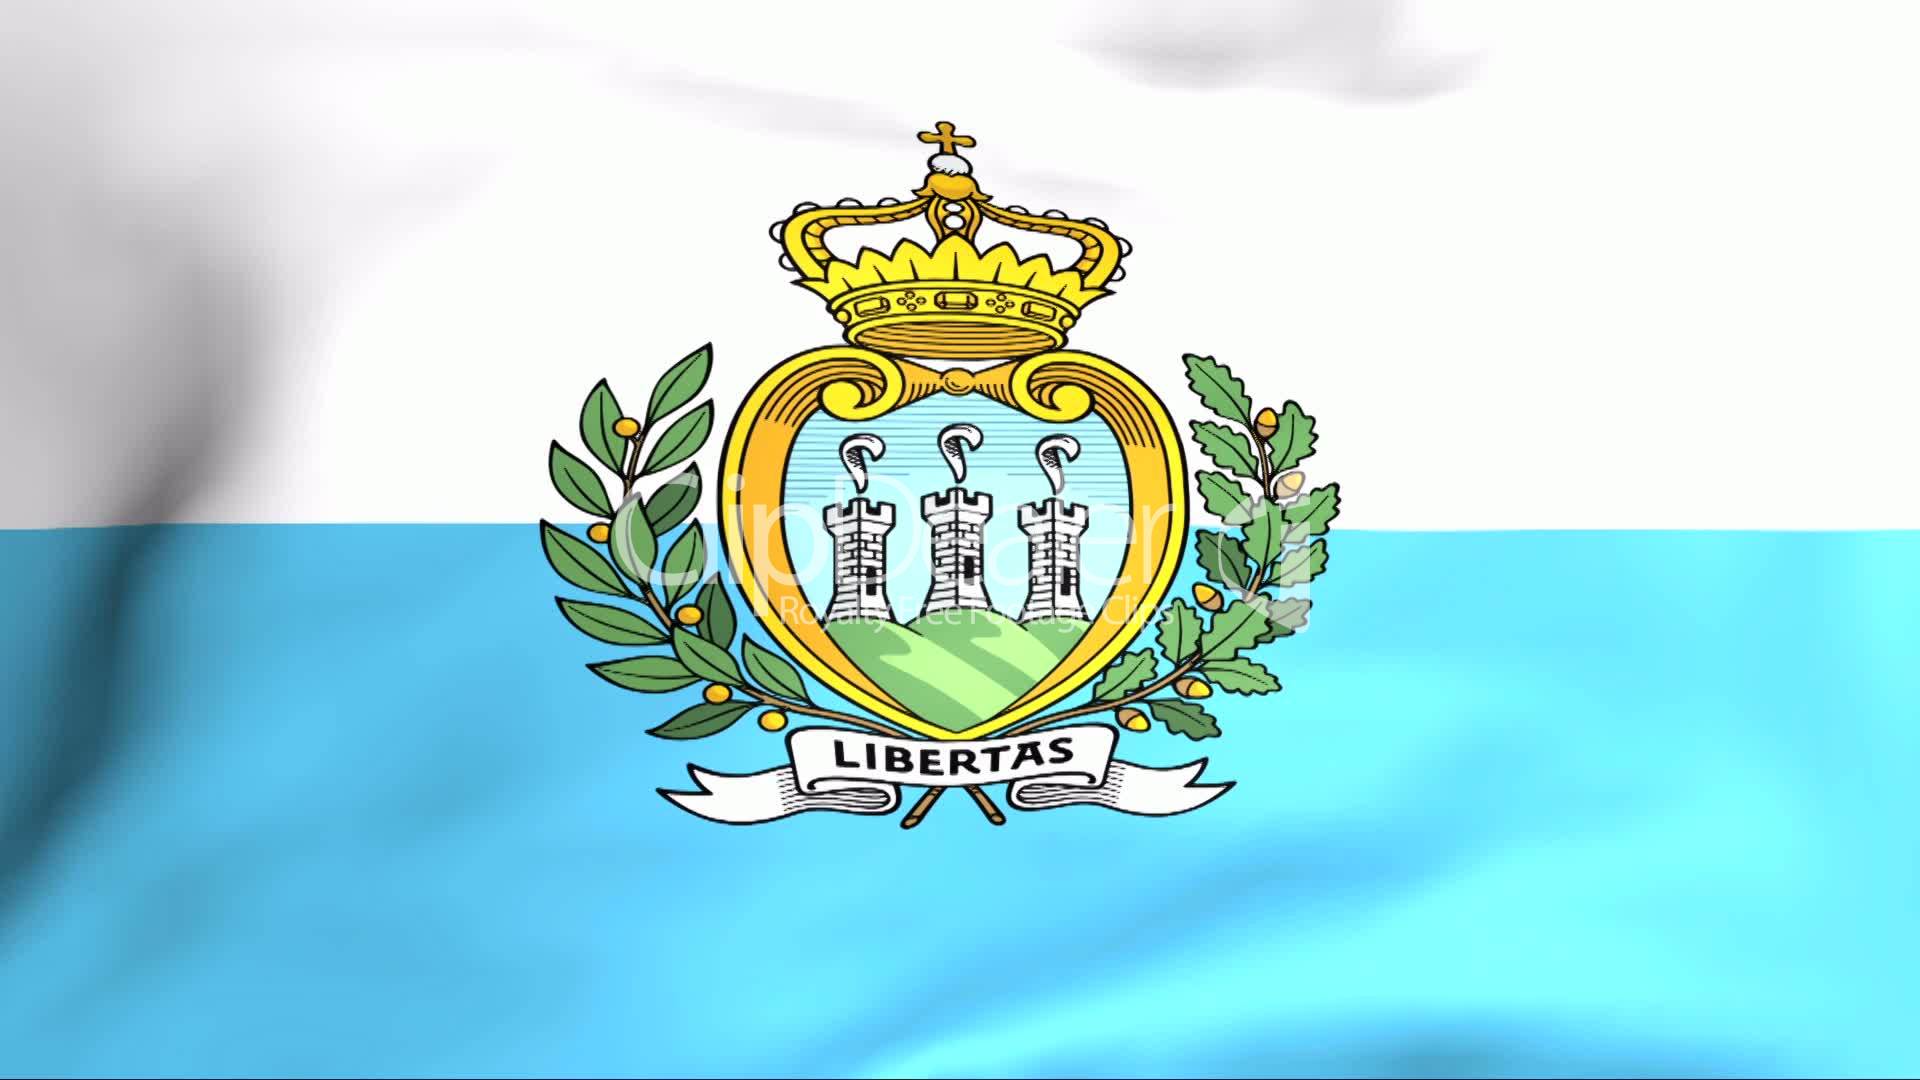 San Marino Flag Image